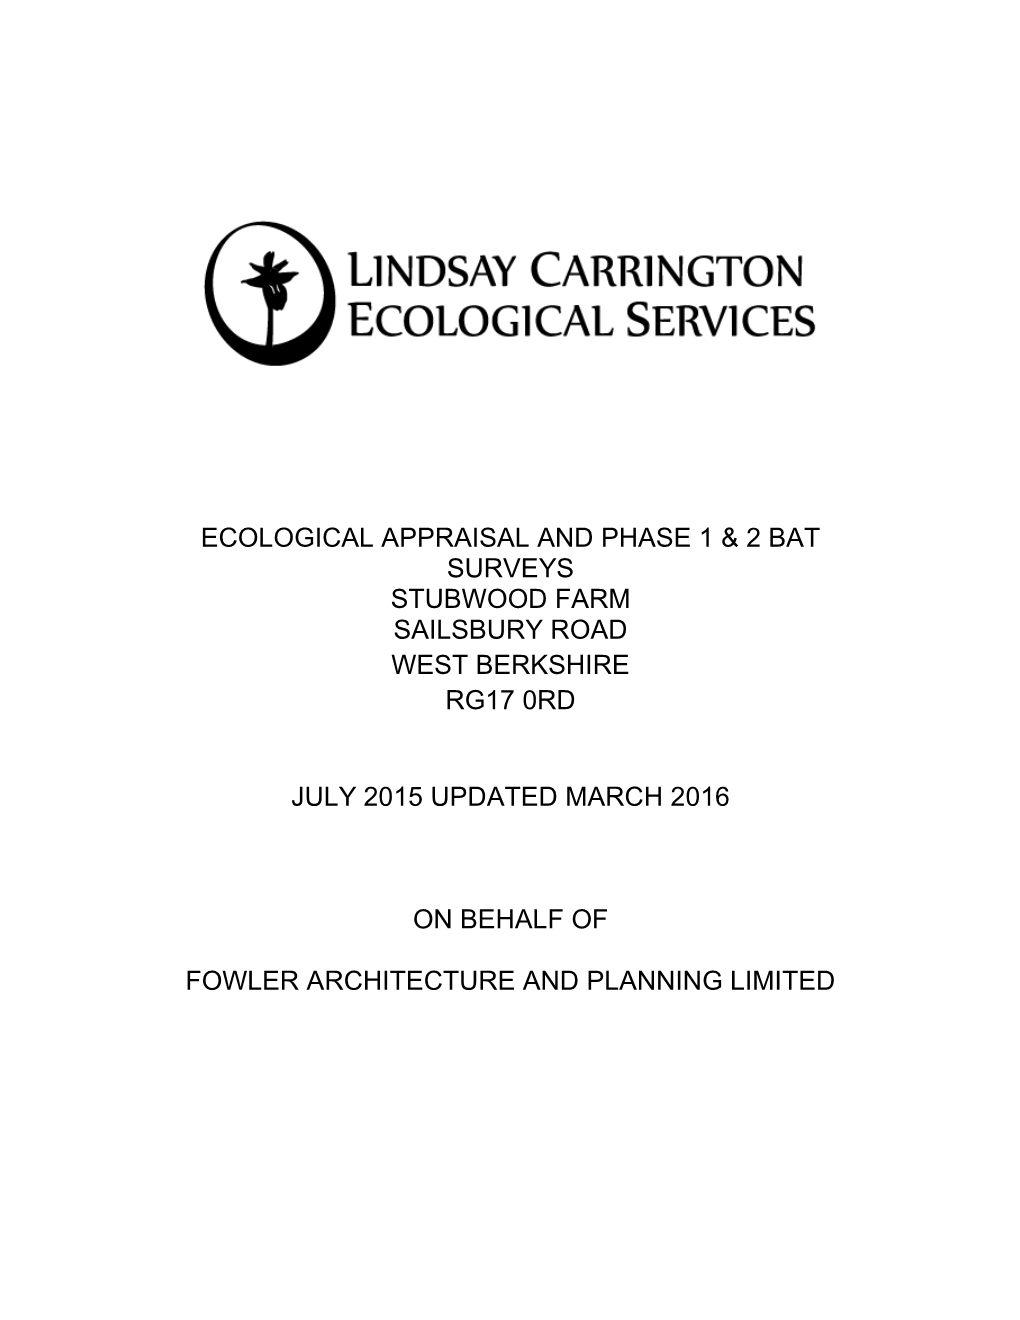 Ecological Appraisal and Phase 1 & 2 Bat Surveys